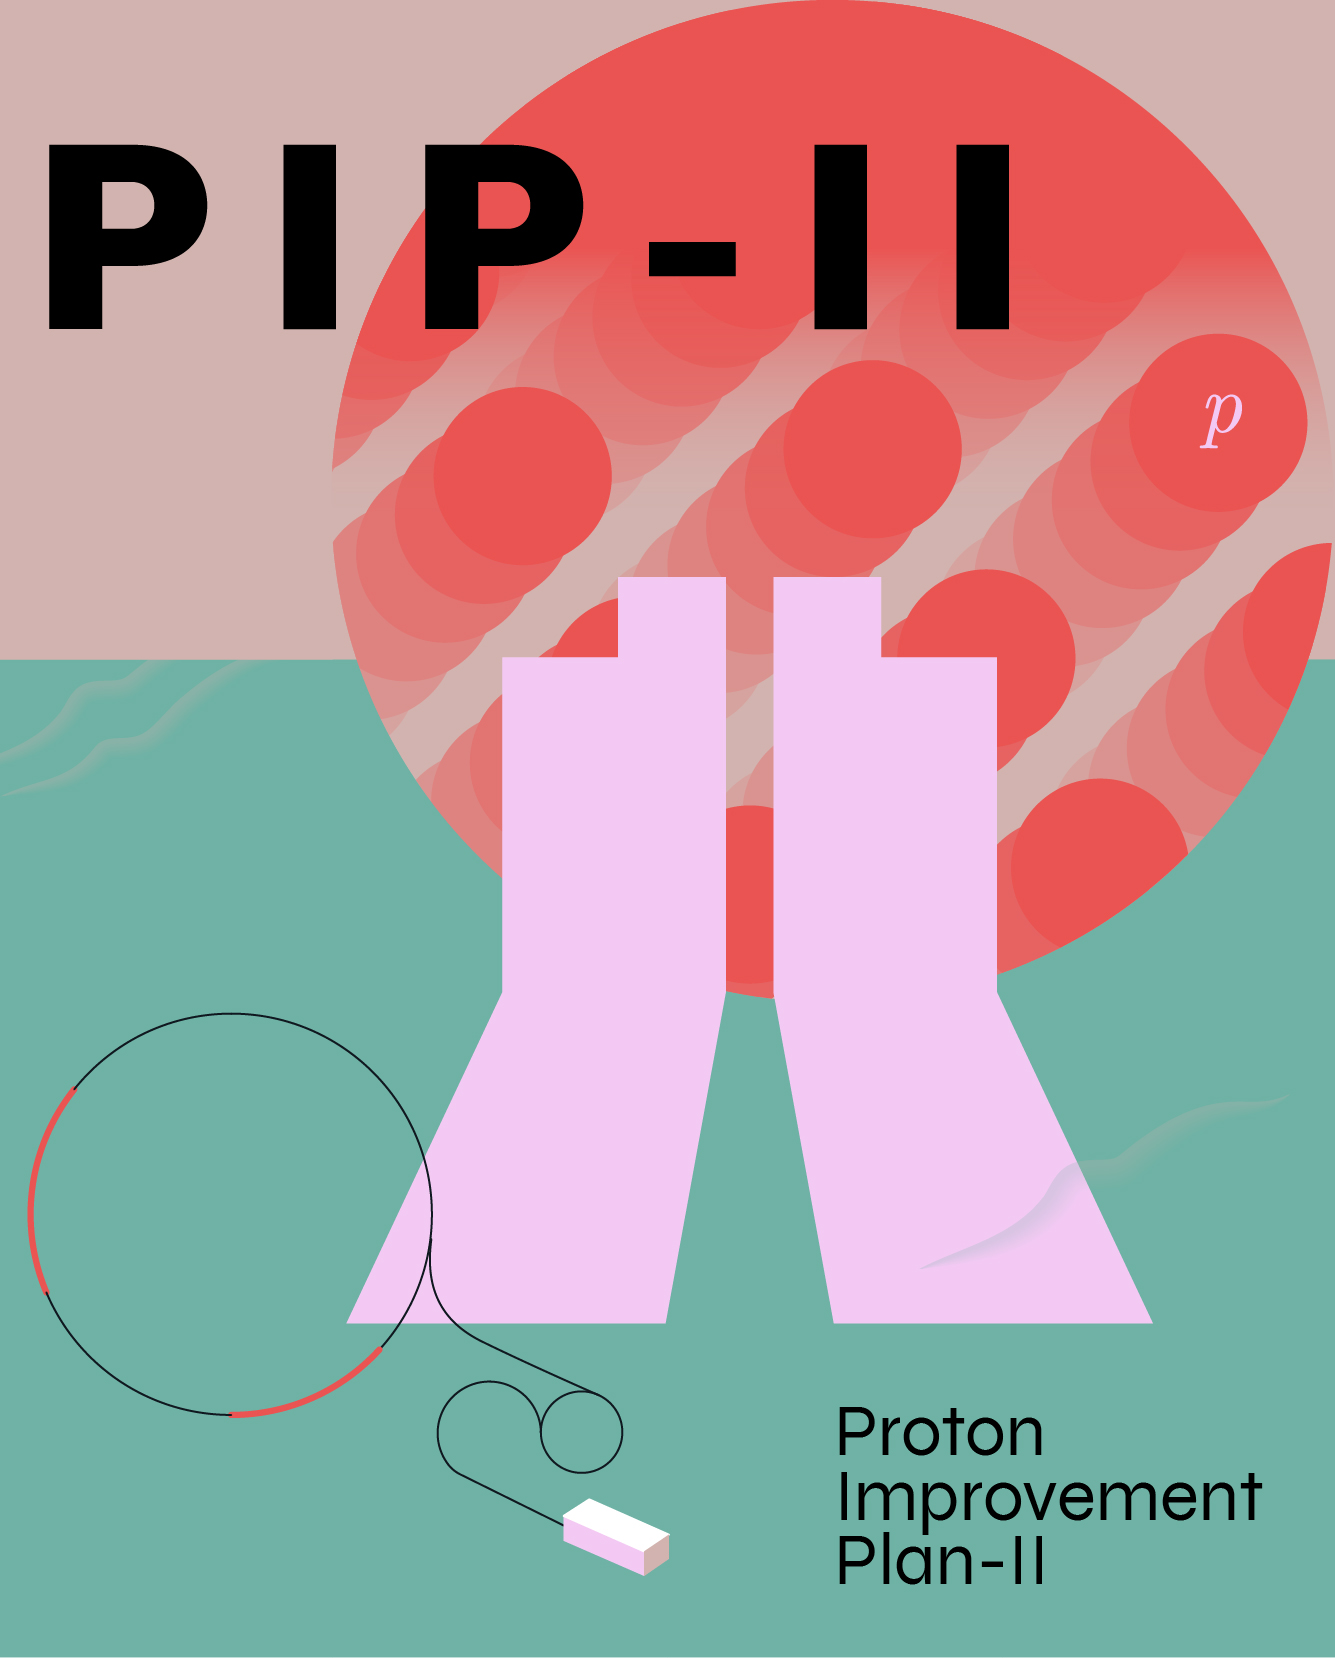 Proton Improvement Plan-II